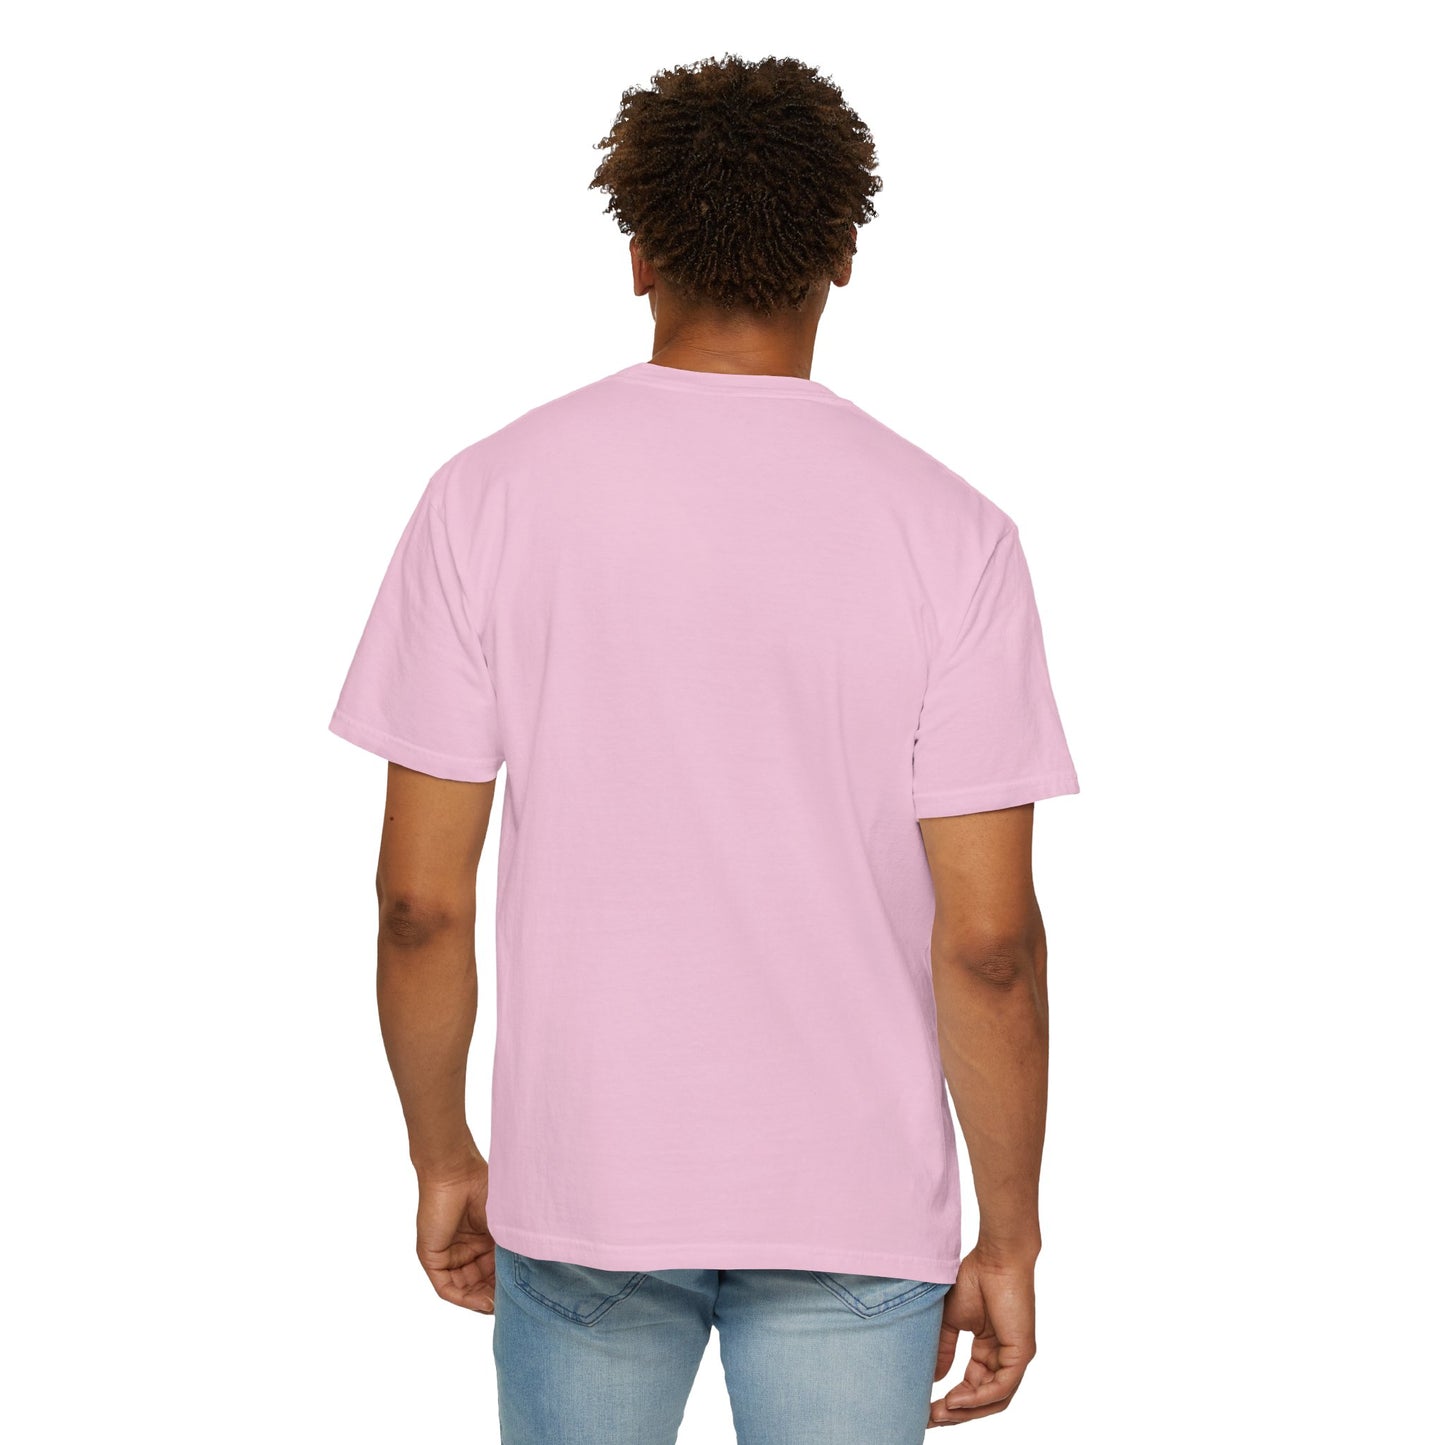 My life feels like a test - Unisex Garment-Dyed T-shirt